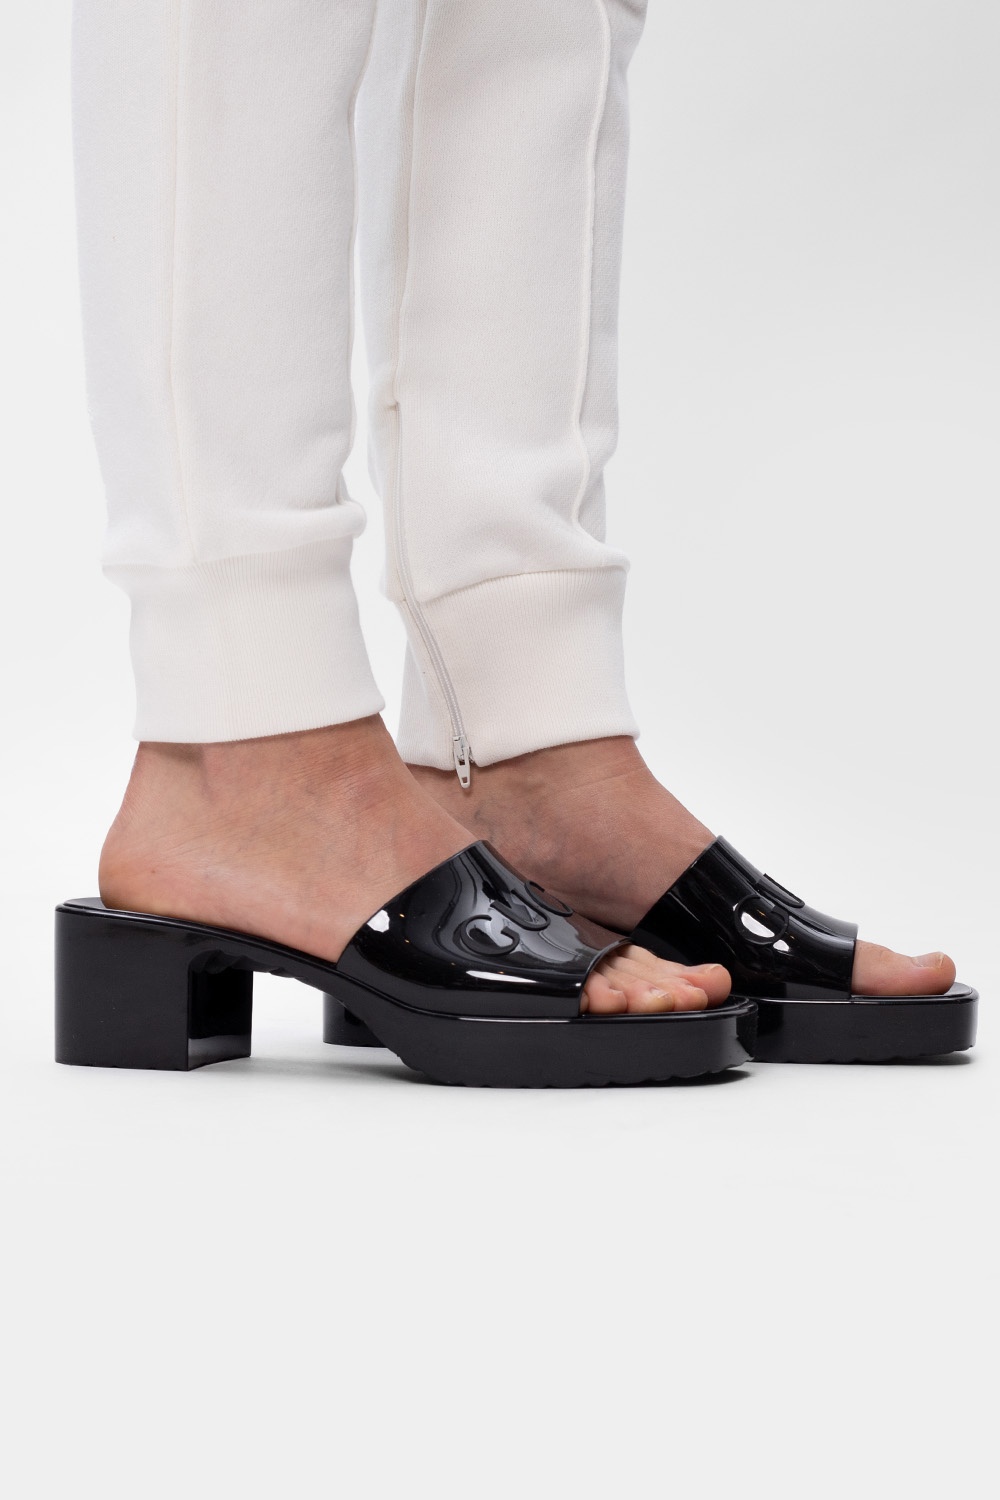 gucci rubber slide sandals